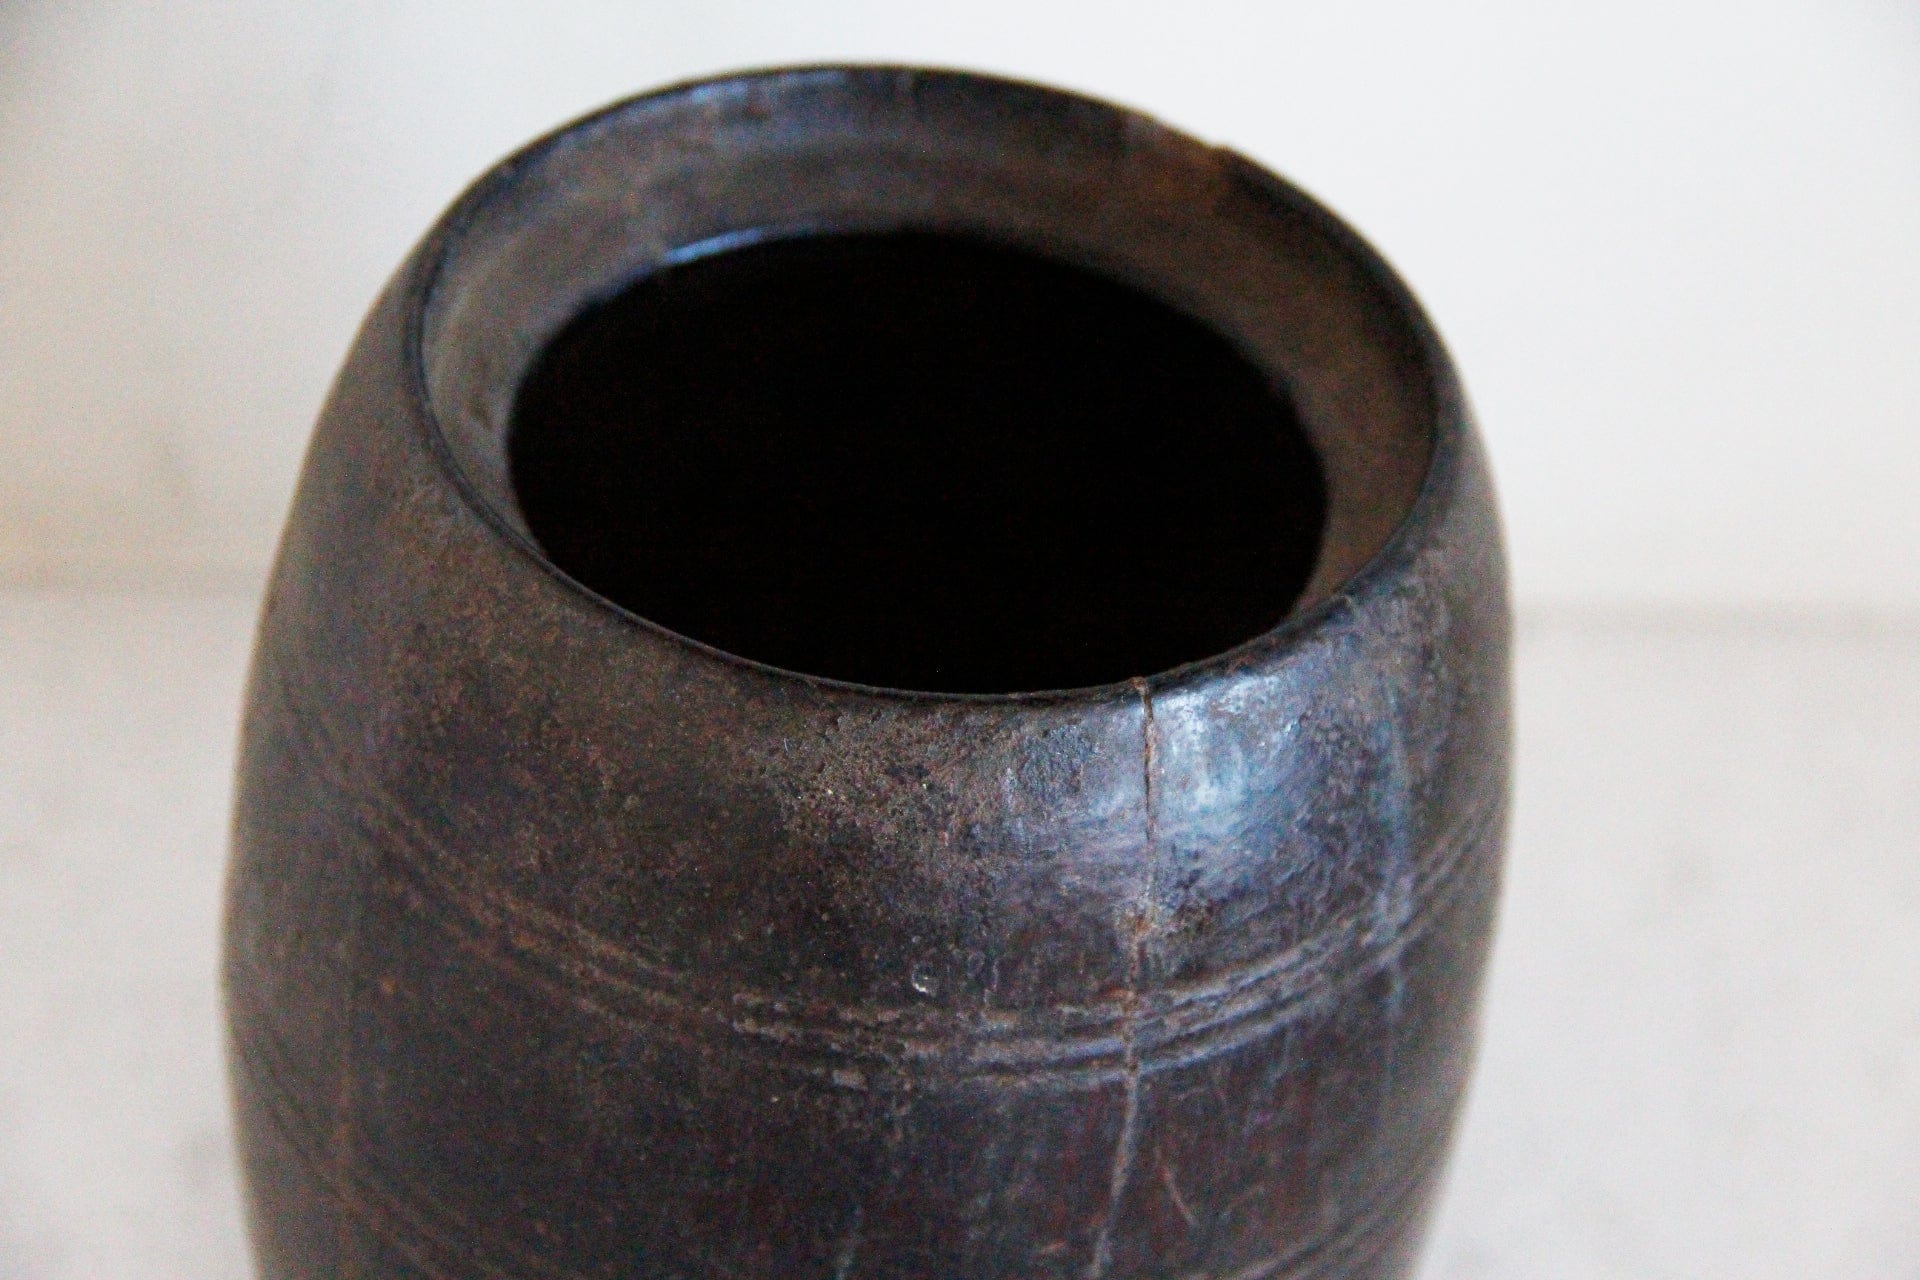 Antique Hand Turned Wood Pot | India - Debra Hall Lifestyle